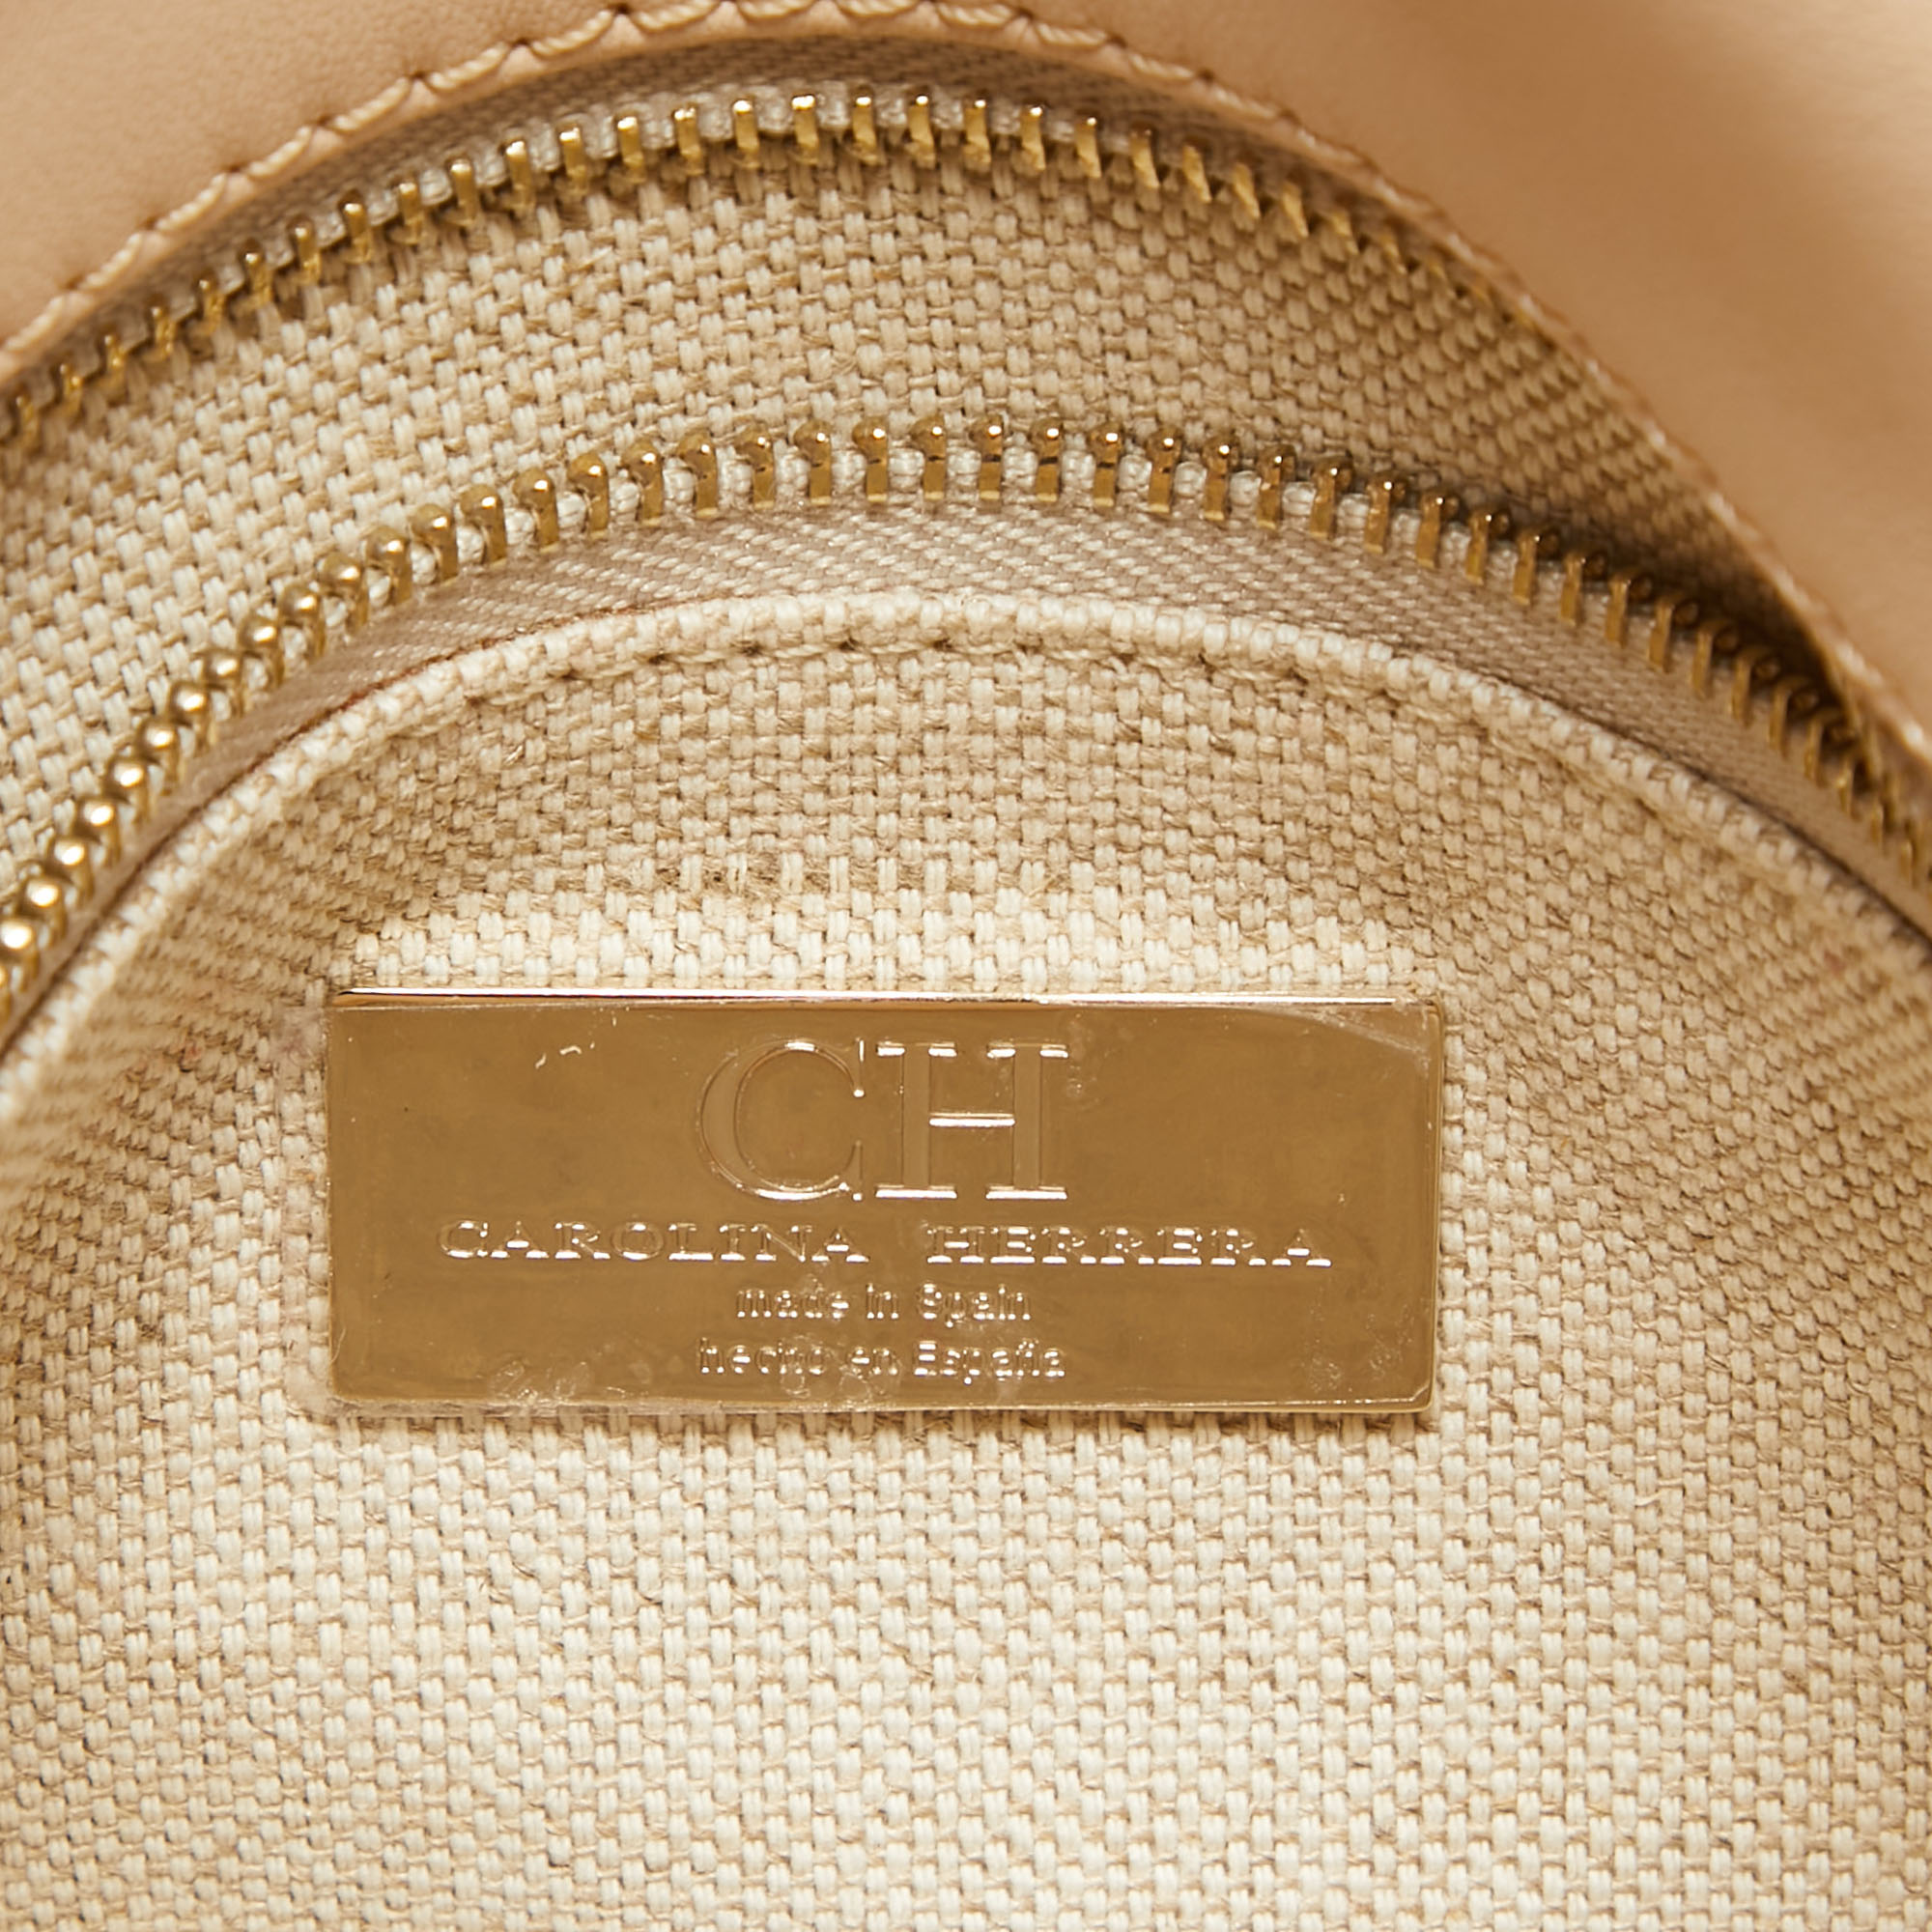 CH Carolina Herrera Light Beige/Gold Embossed Leather Top Handle Bag